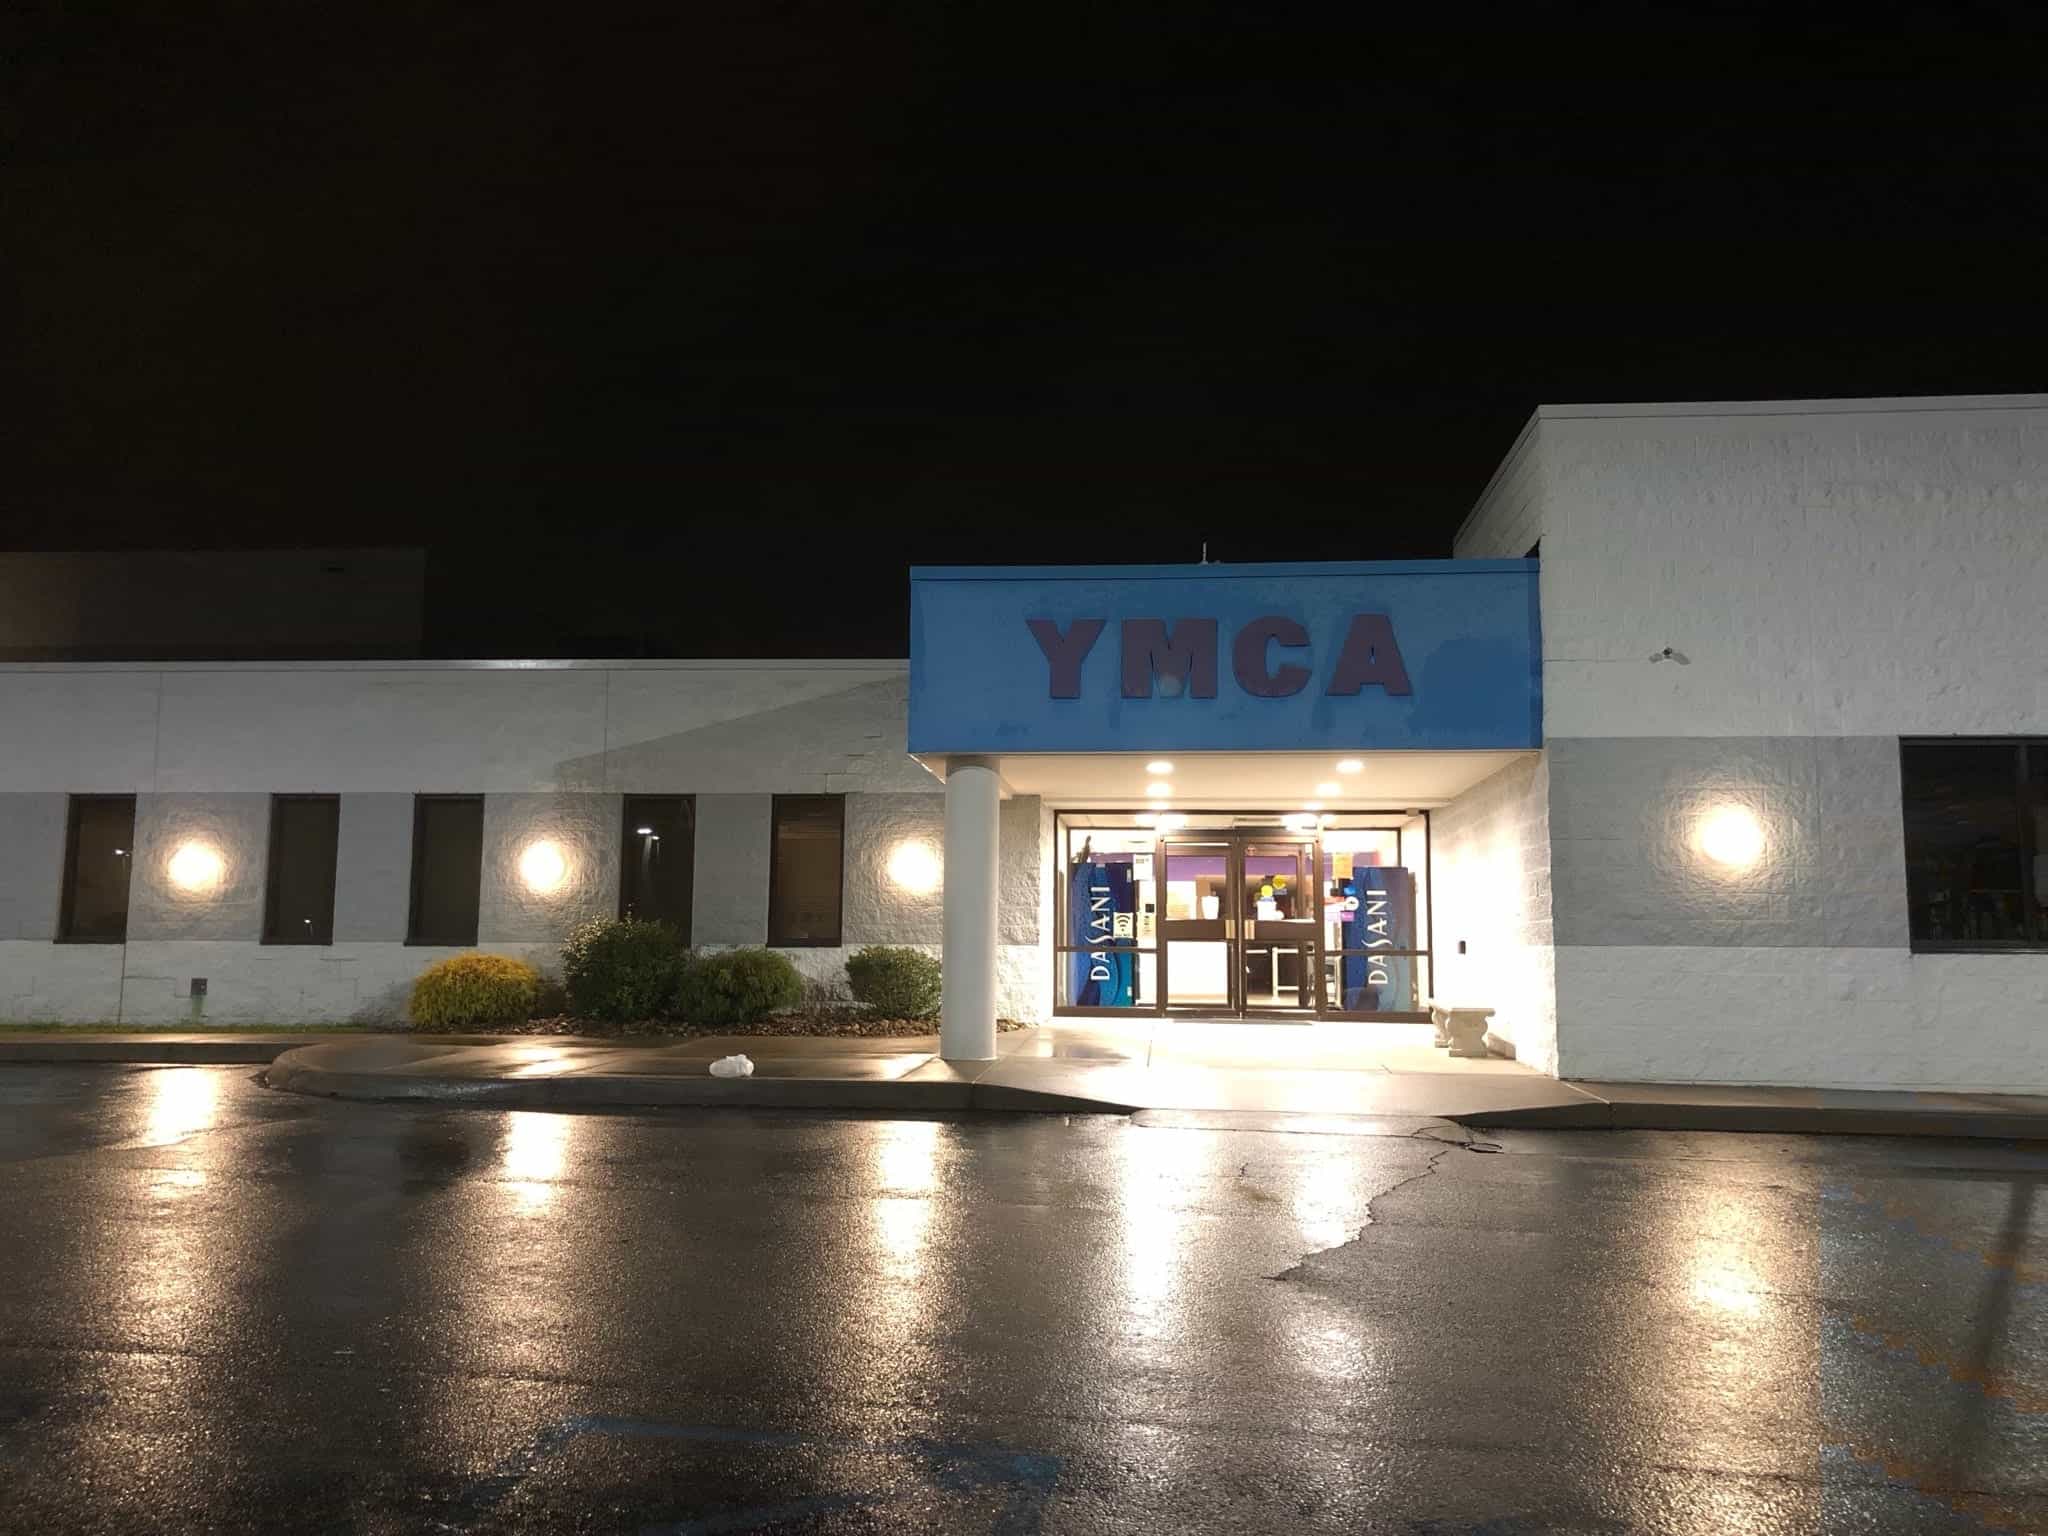 Teays Valley YMCA